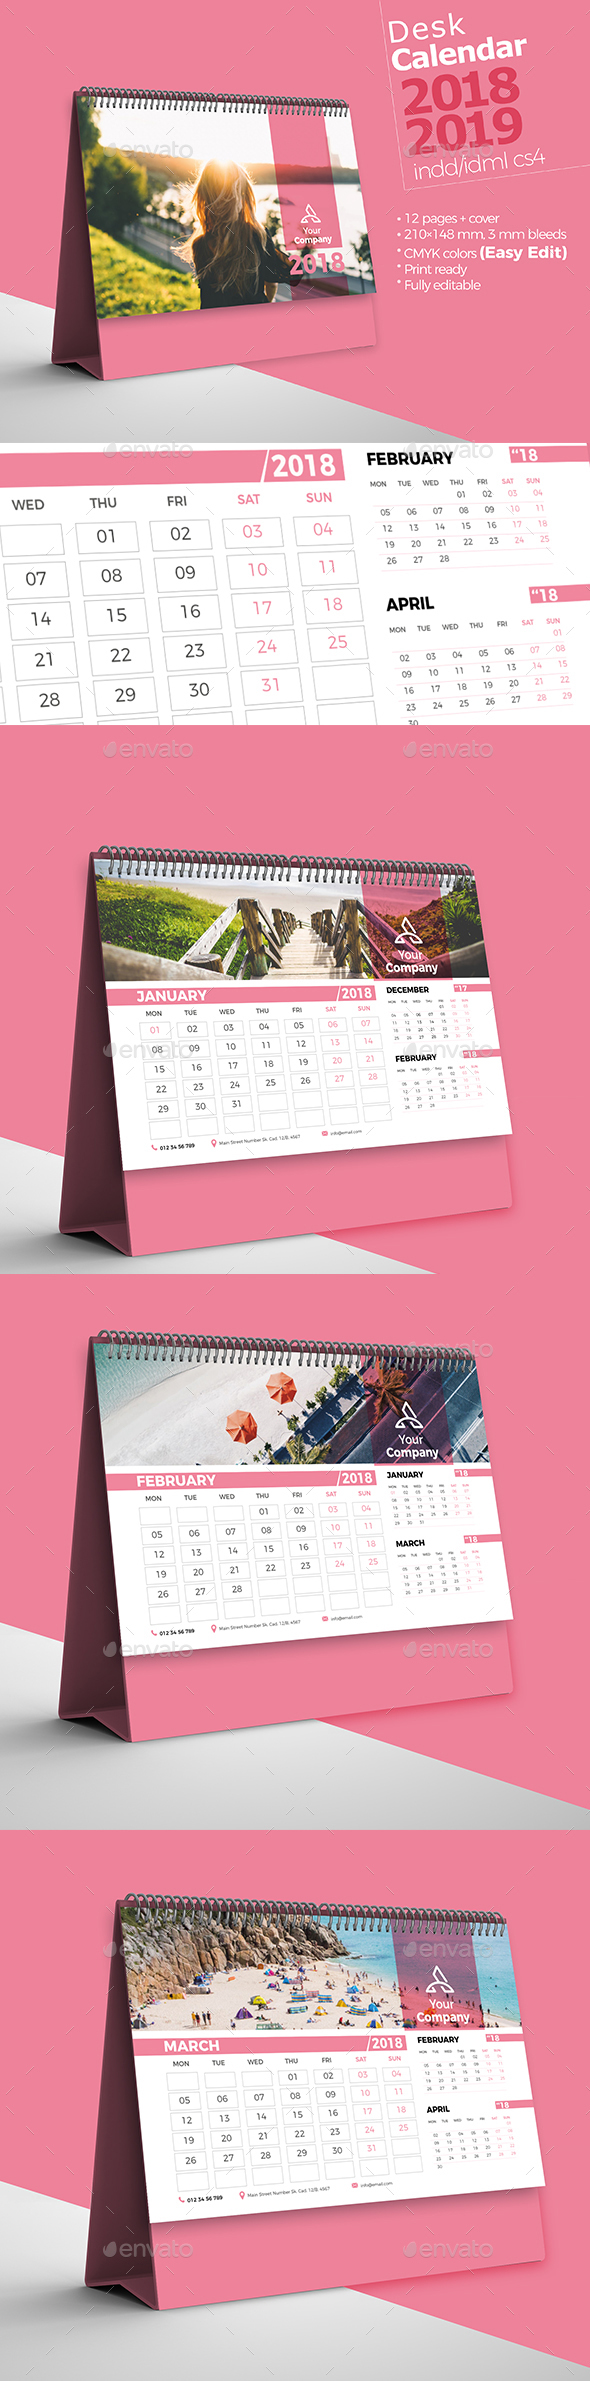 Colorful Desk Calendar 2018-19